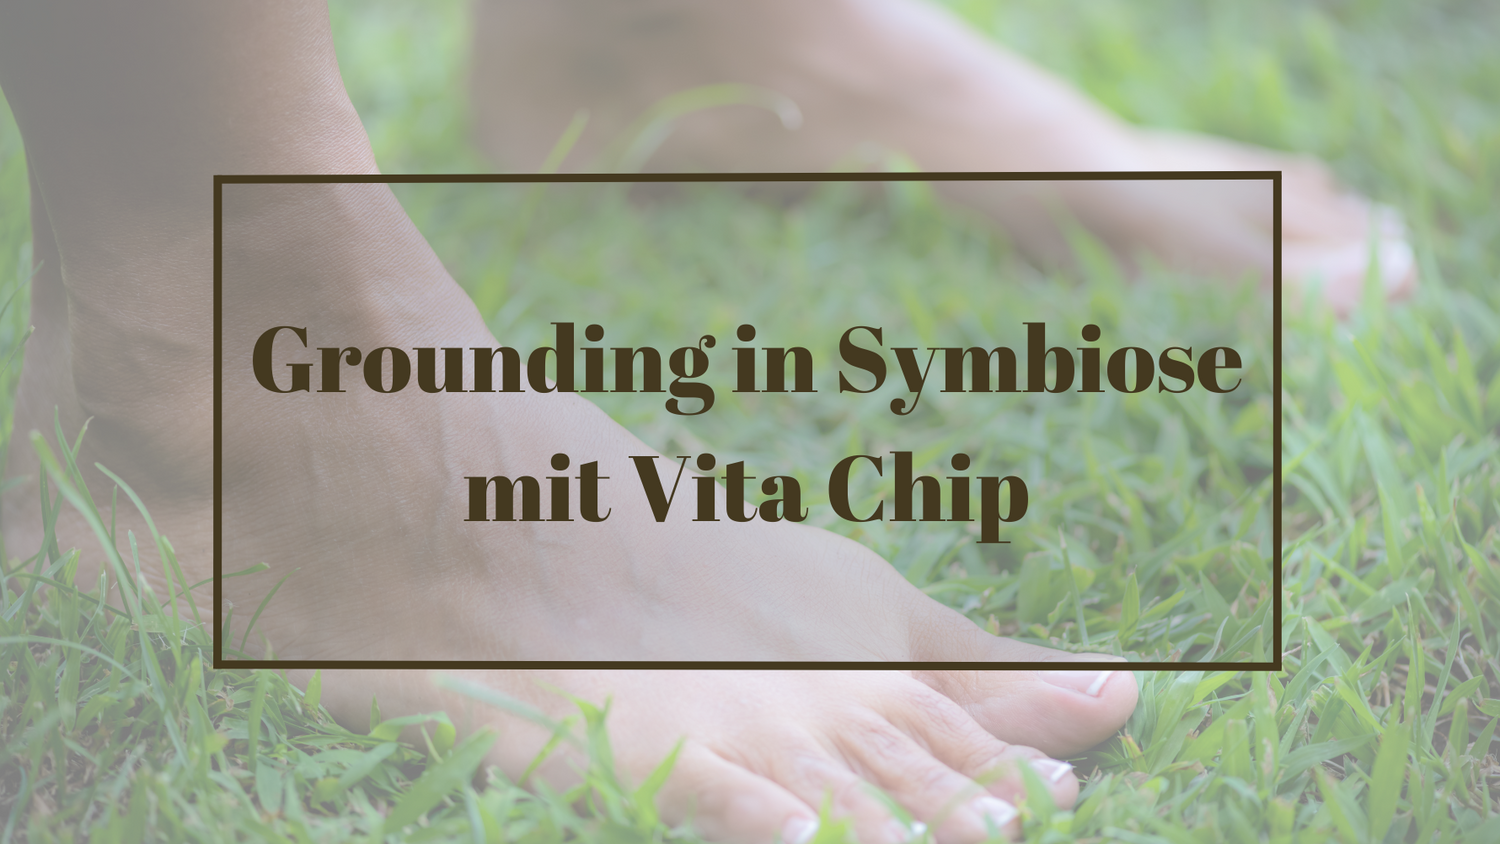 Grounding in Symbiose mit Vita Chip